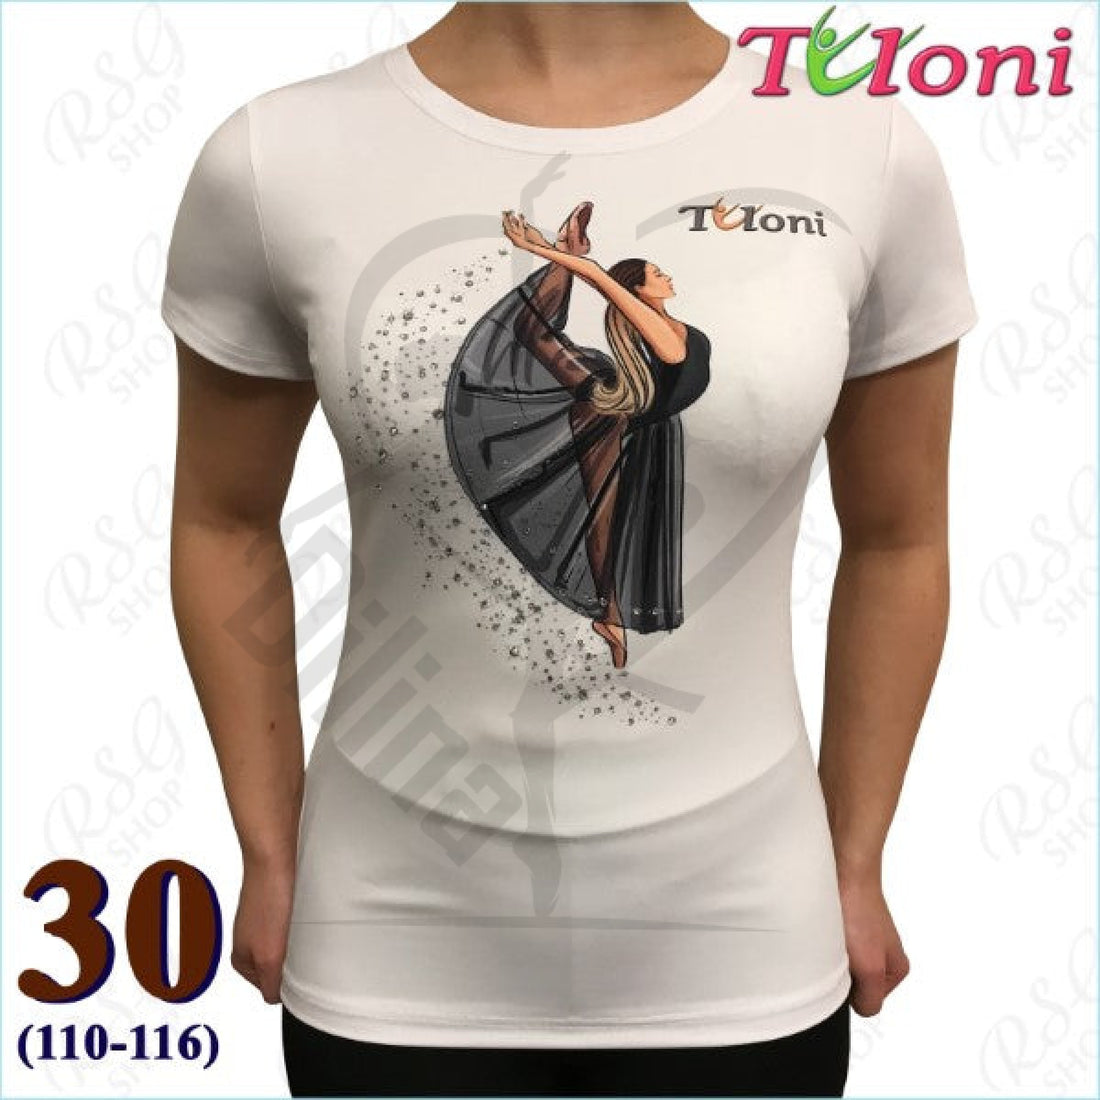 Tuloni White T-Shirt Mod. Ballet 30 (110-116) T Shirts & Tops